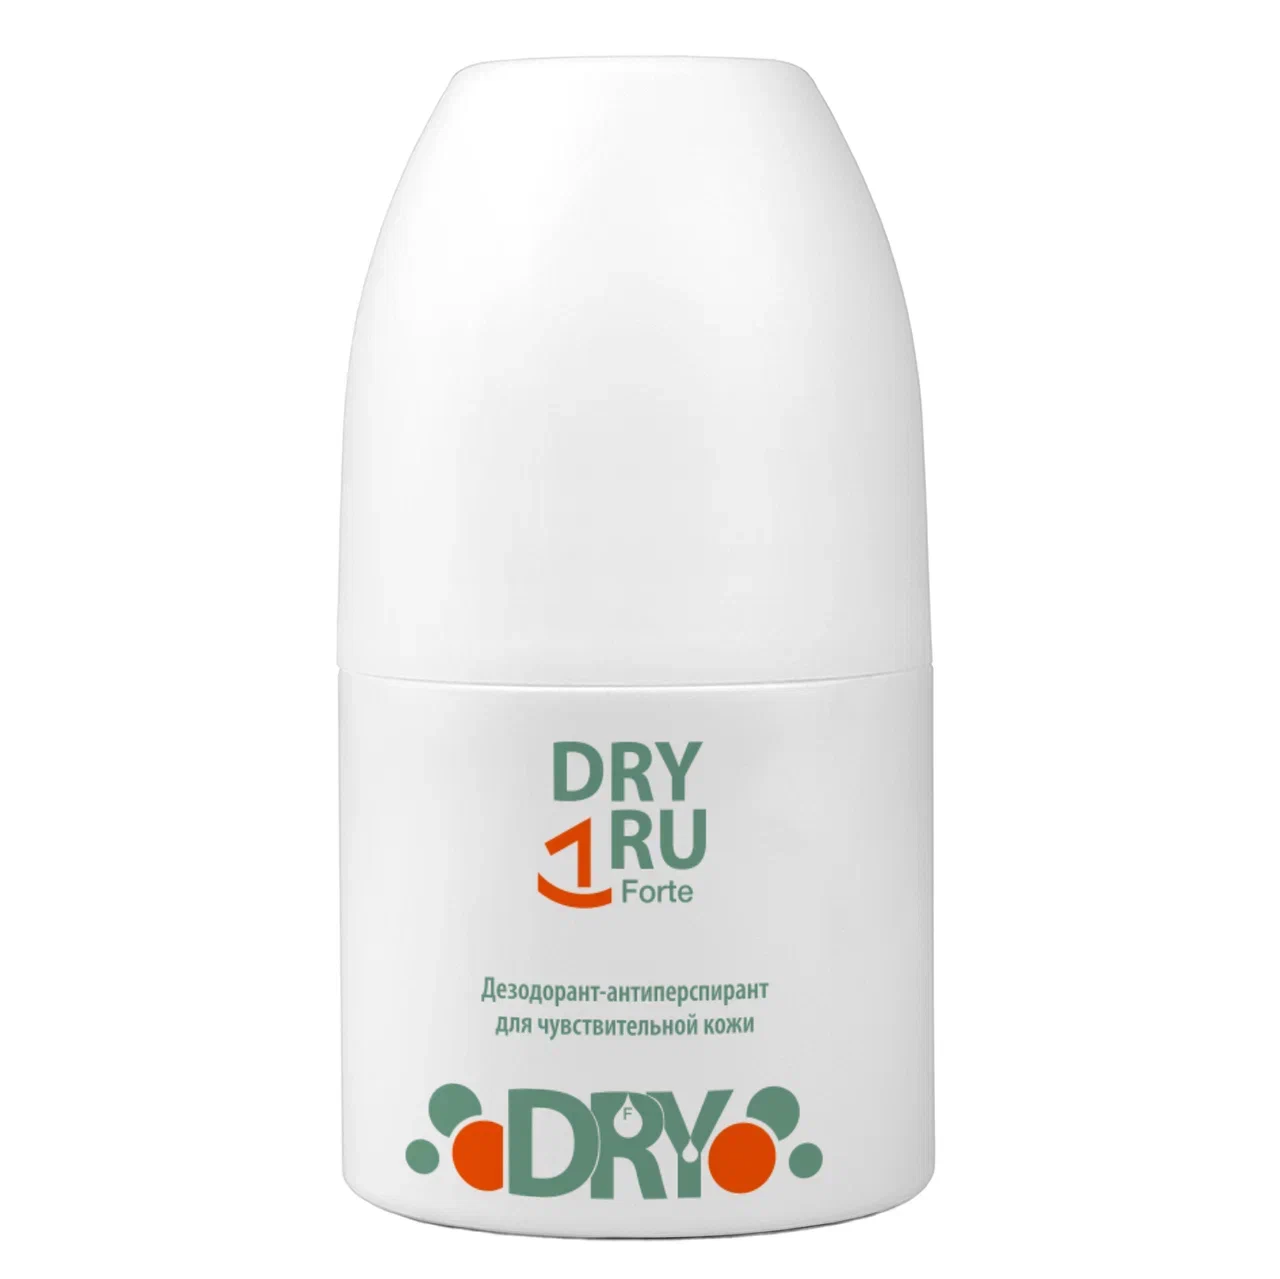 Дезодоран-антиперспирантт DRY RU Forte мужской, шариковый, от пота и запаха 50 мл ролик от потоотделения 30 % б спирта витатека драй экстра форте vitateka dry extra forte 50 мл